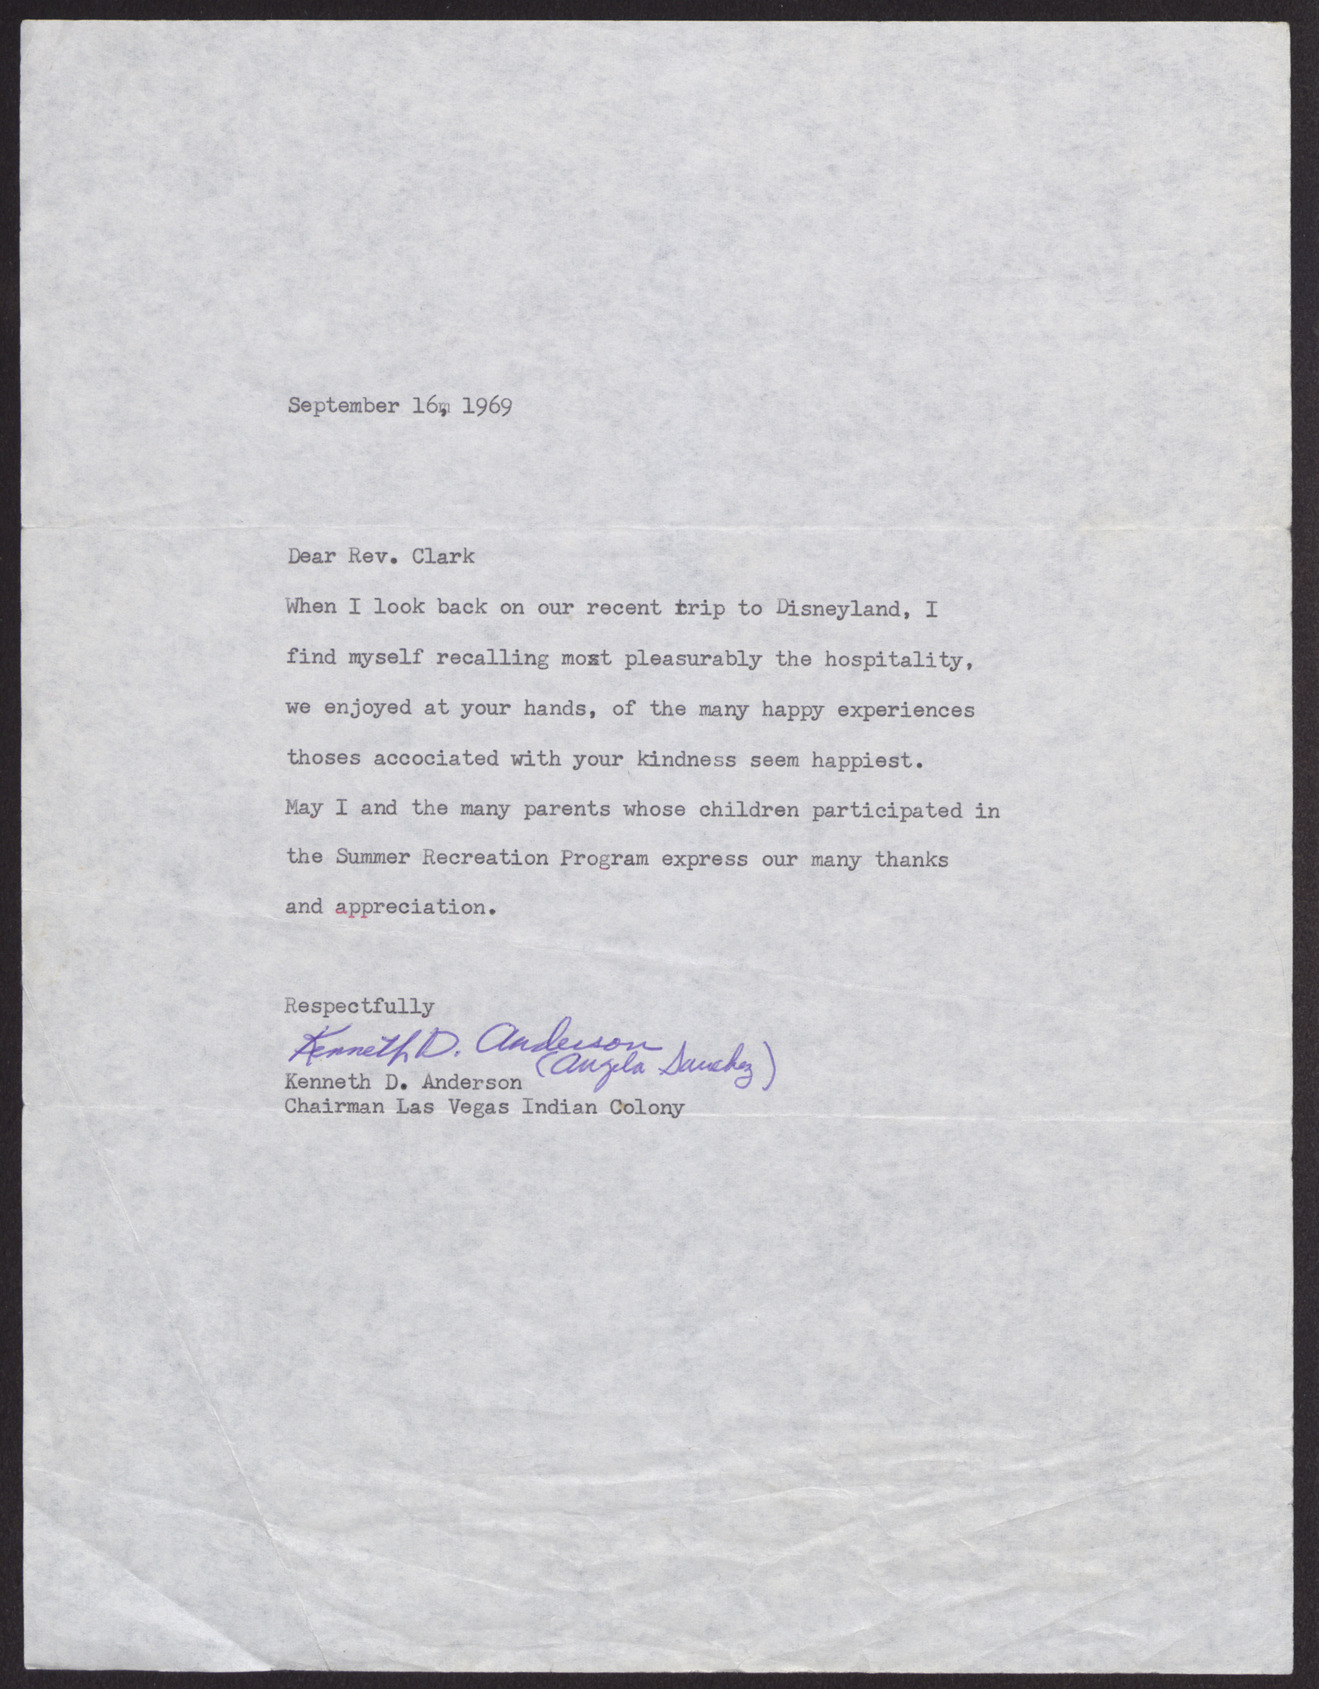 Letter to Rev. Clark from Kenneth D. Anderson, September 16, 1969